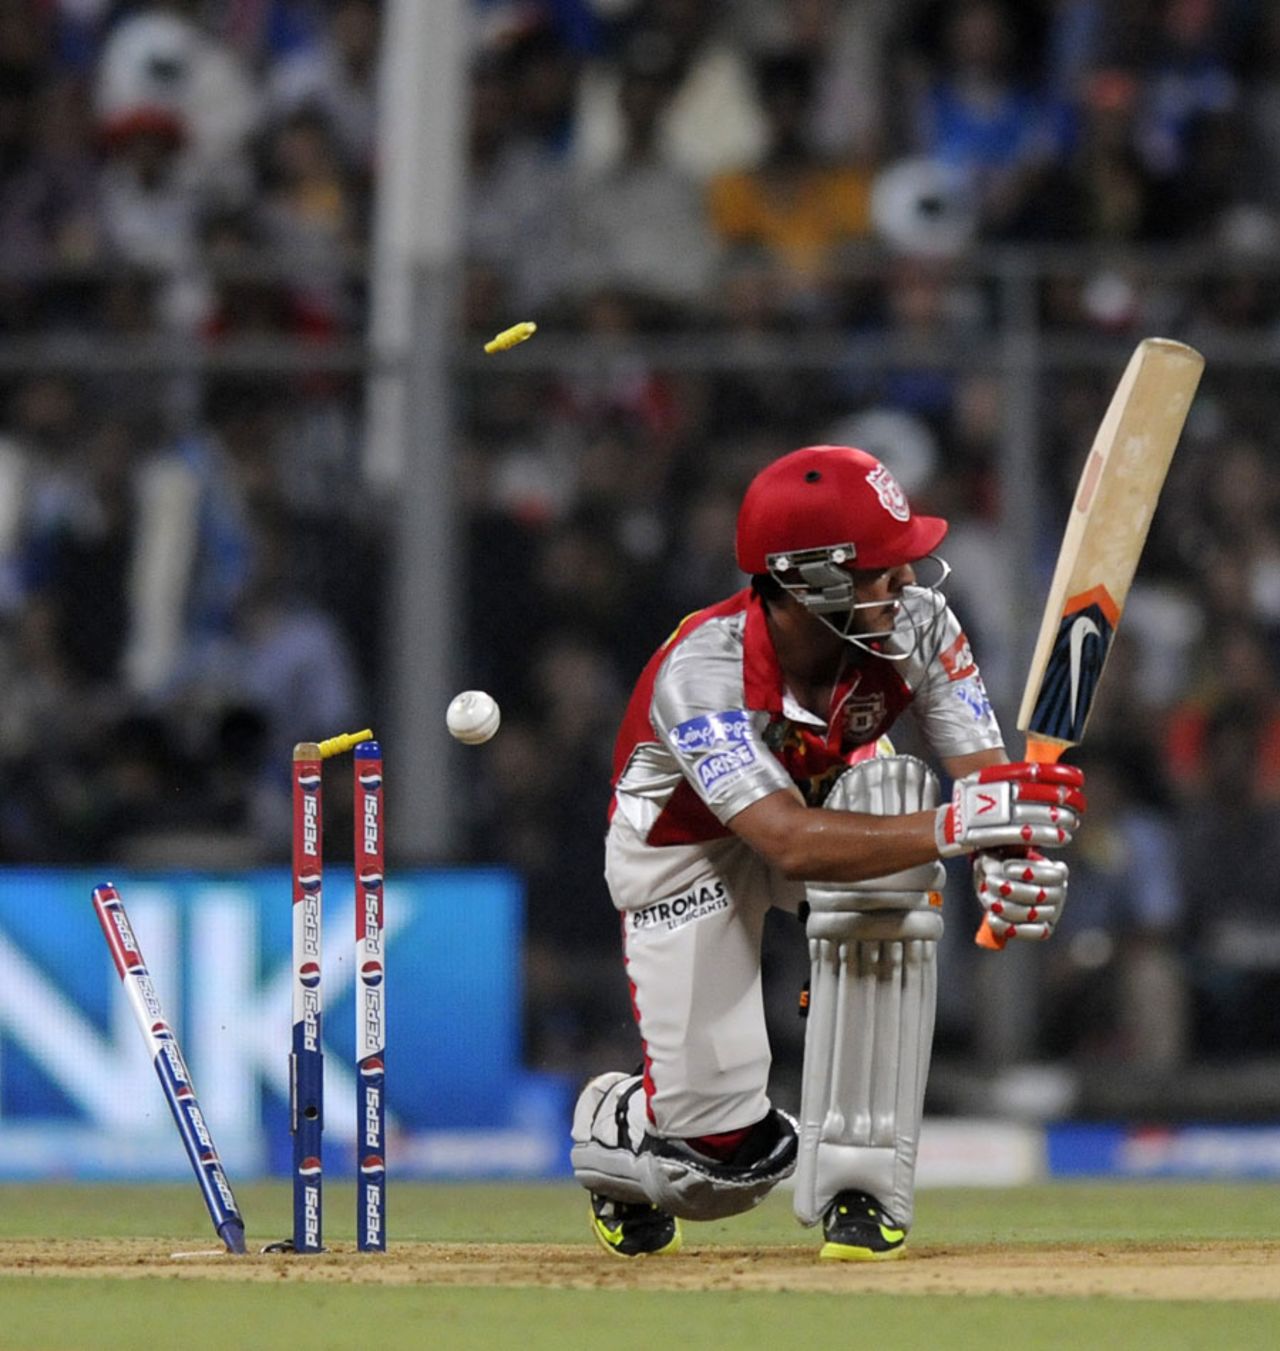 Mandeep Singh's stumps are shattered by a Lasith Malinga delivery, Mumbai Indians v Kings XI Punjab, IPL 2013, Mumbai, April 29, 2013
